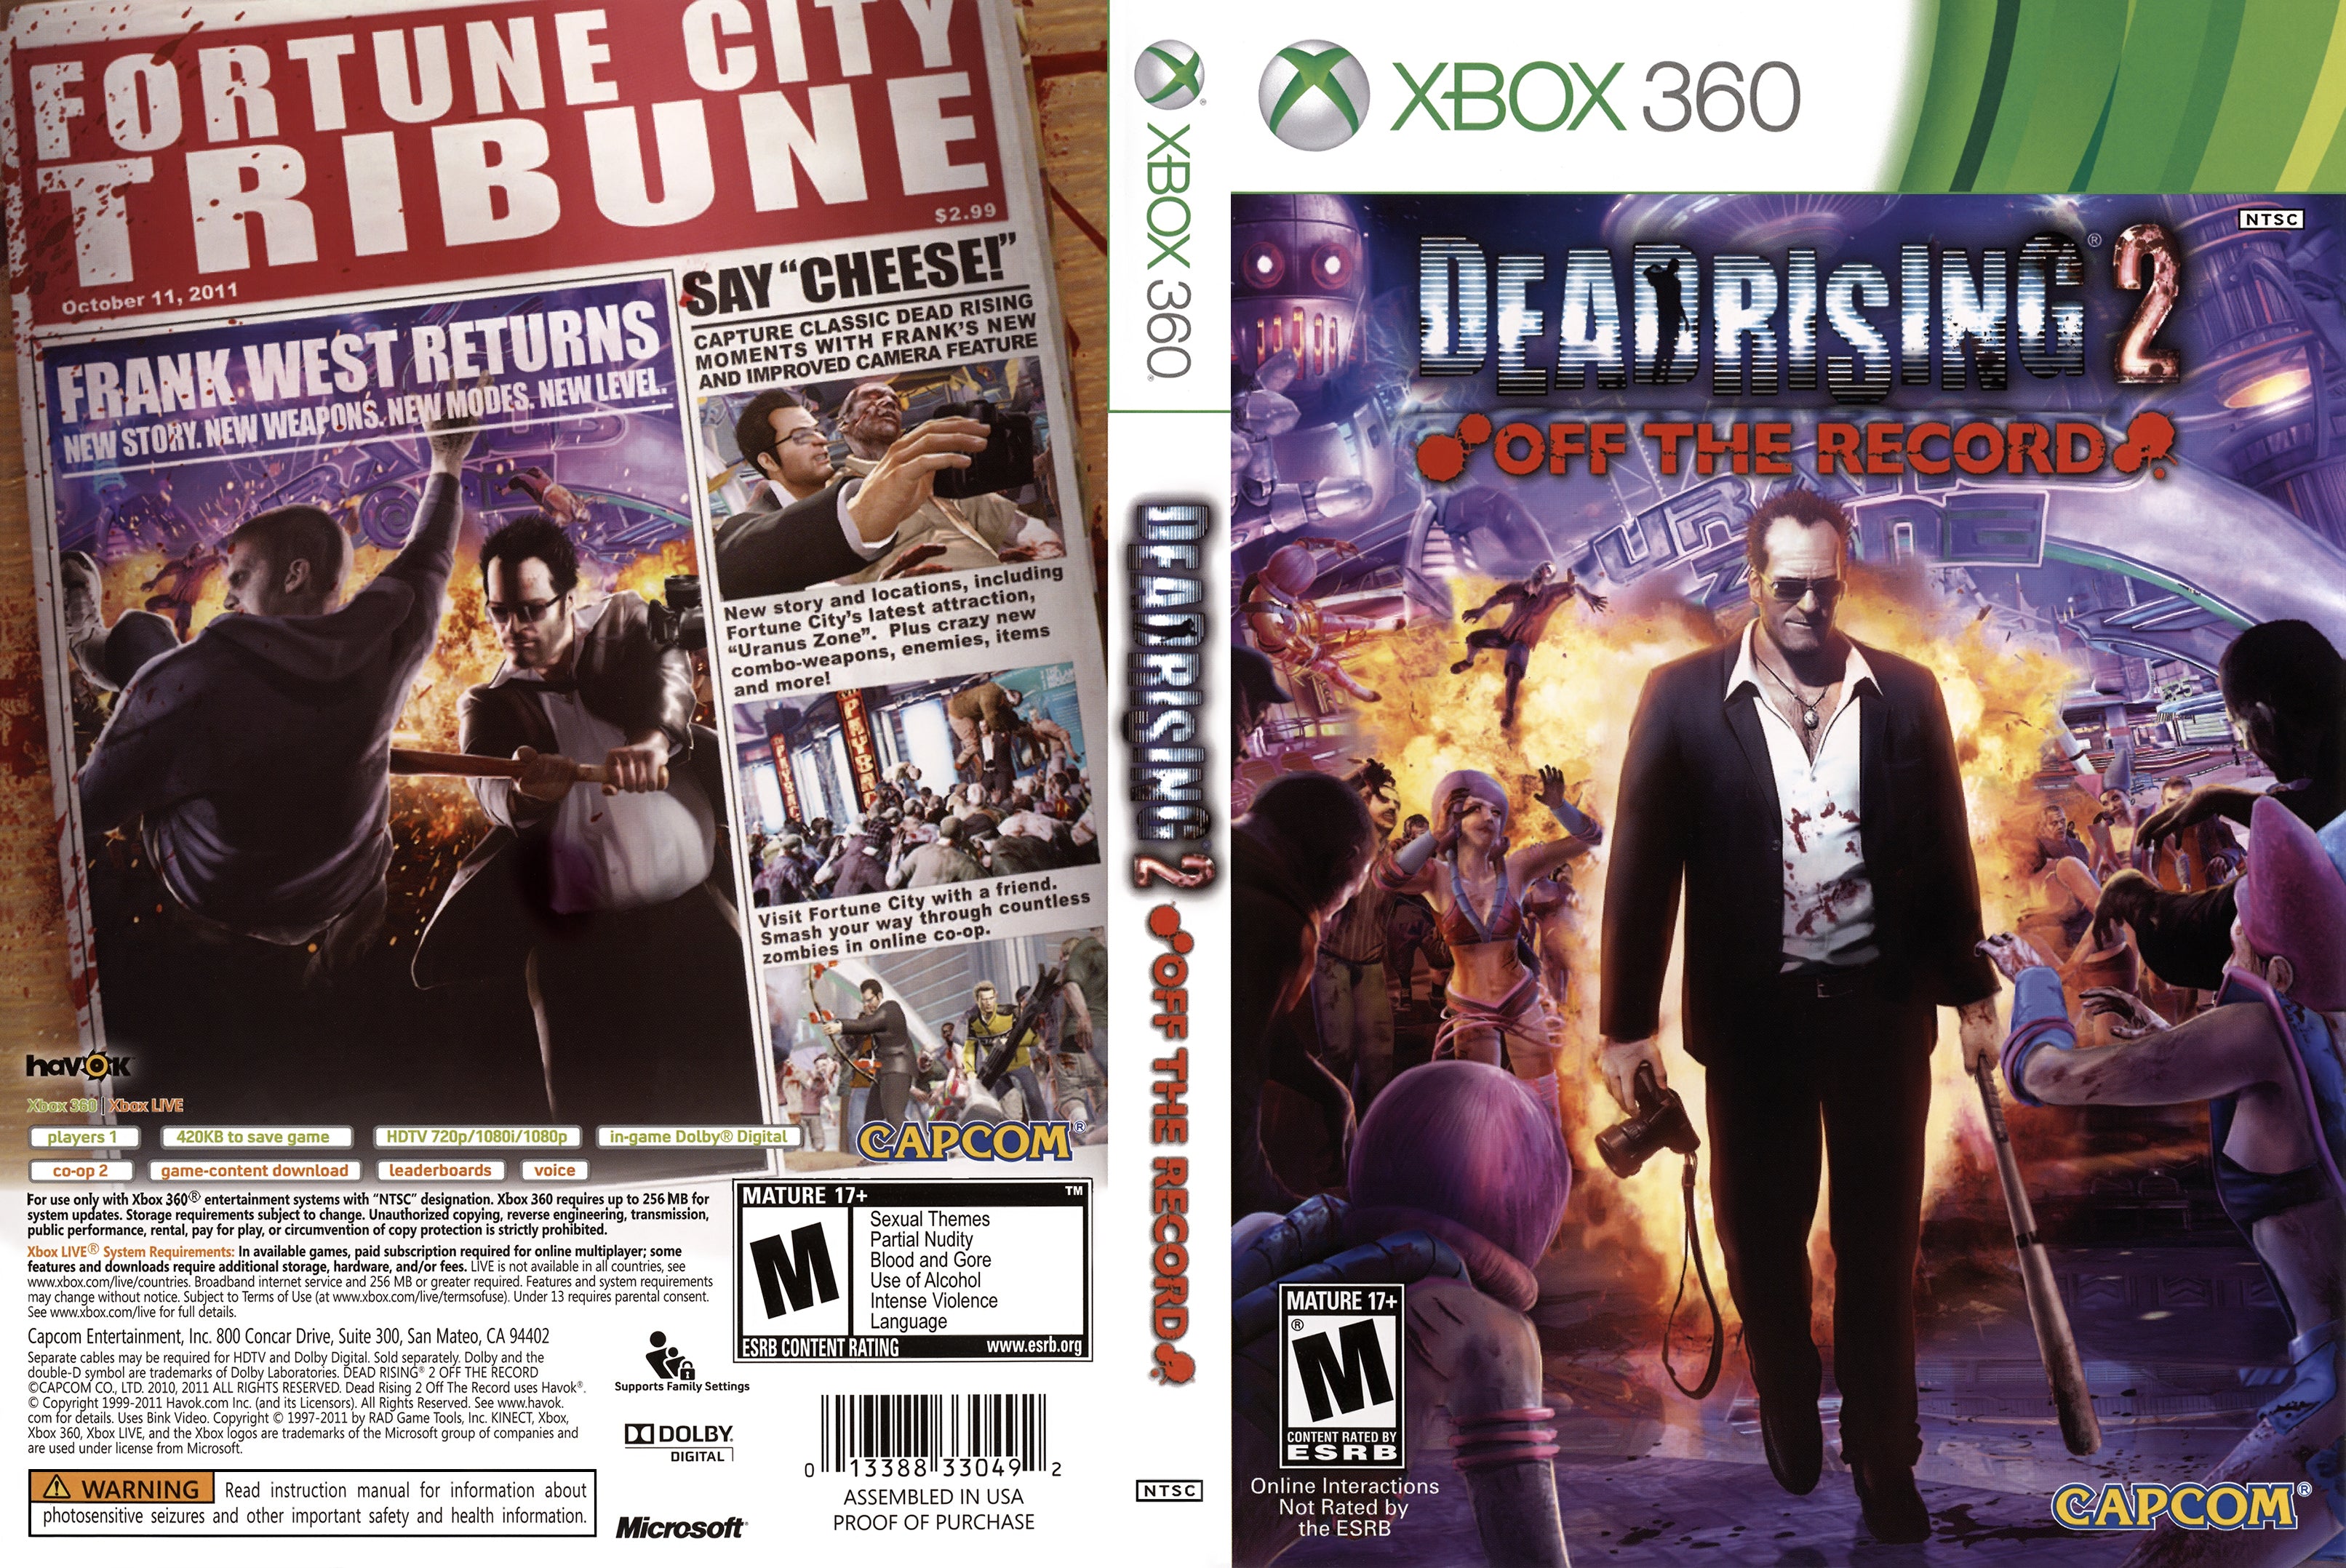 Dead Rising 2 (Xbox 360)